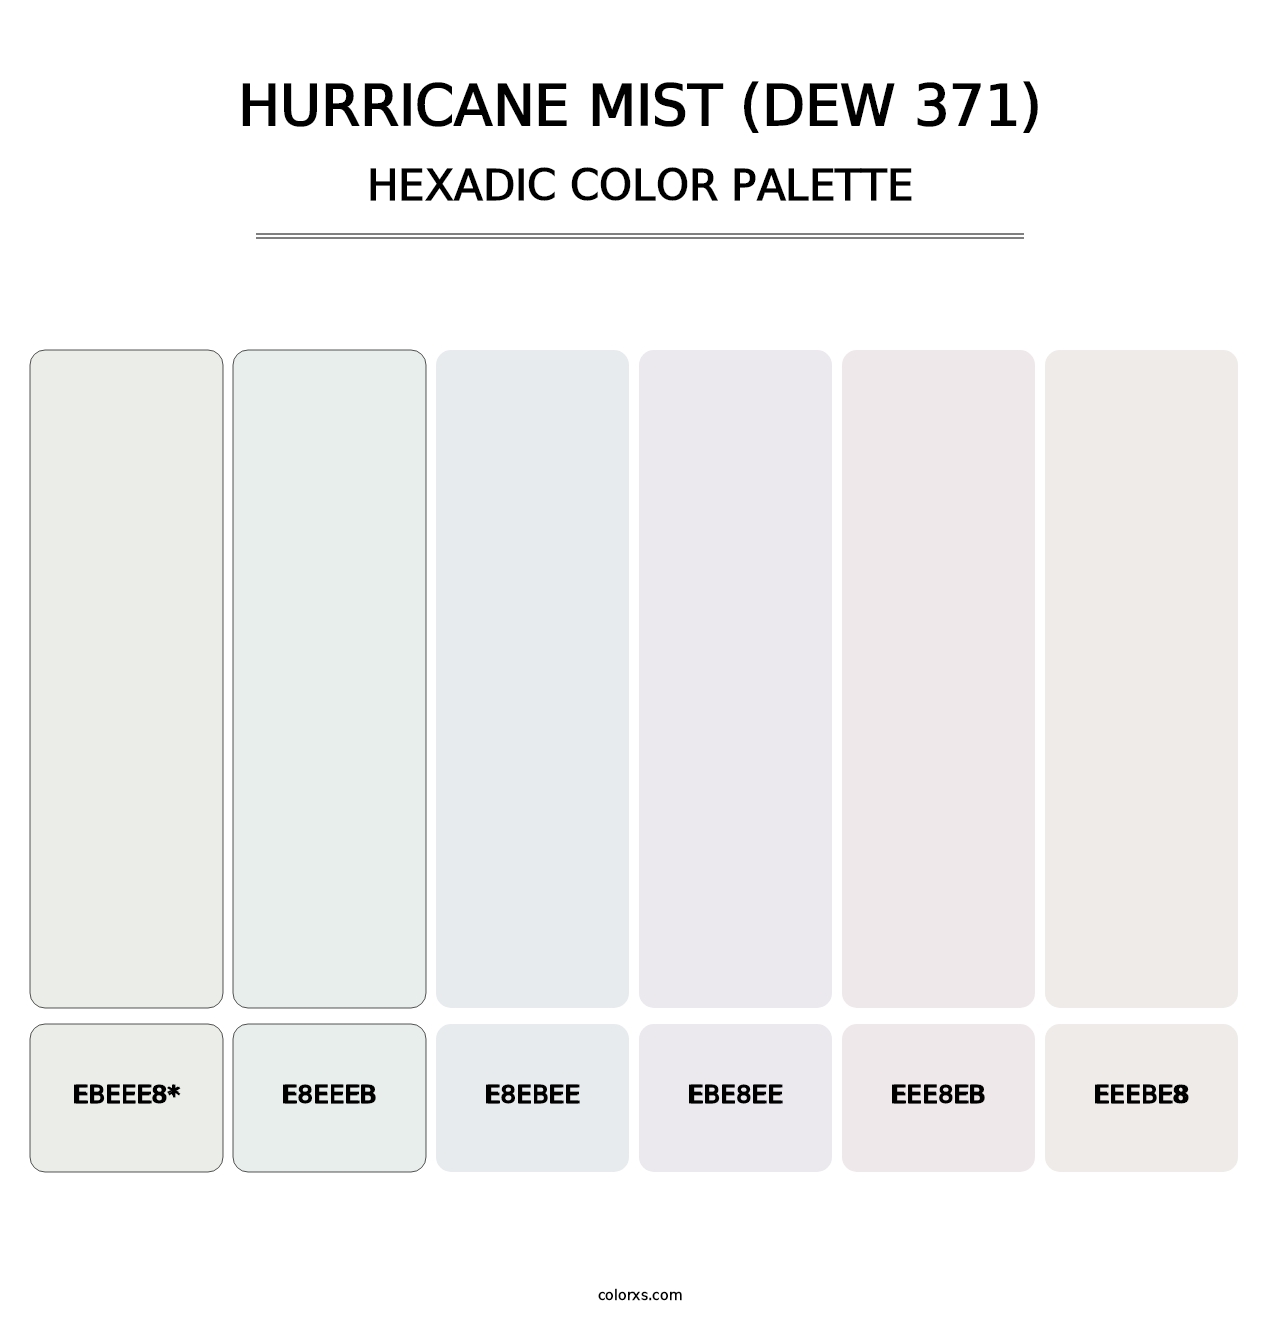 Hurricane Mist (DEW 371) - Hexadic Color Palette